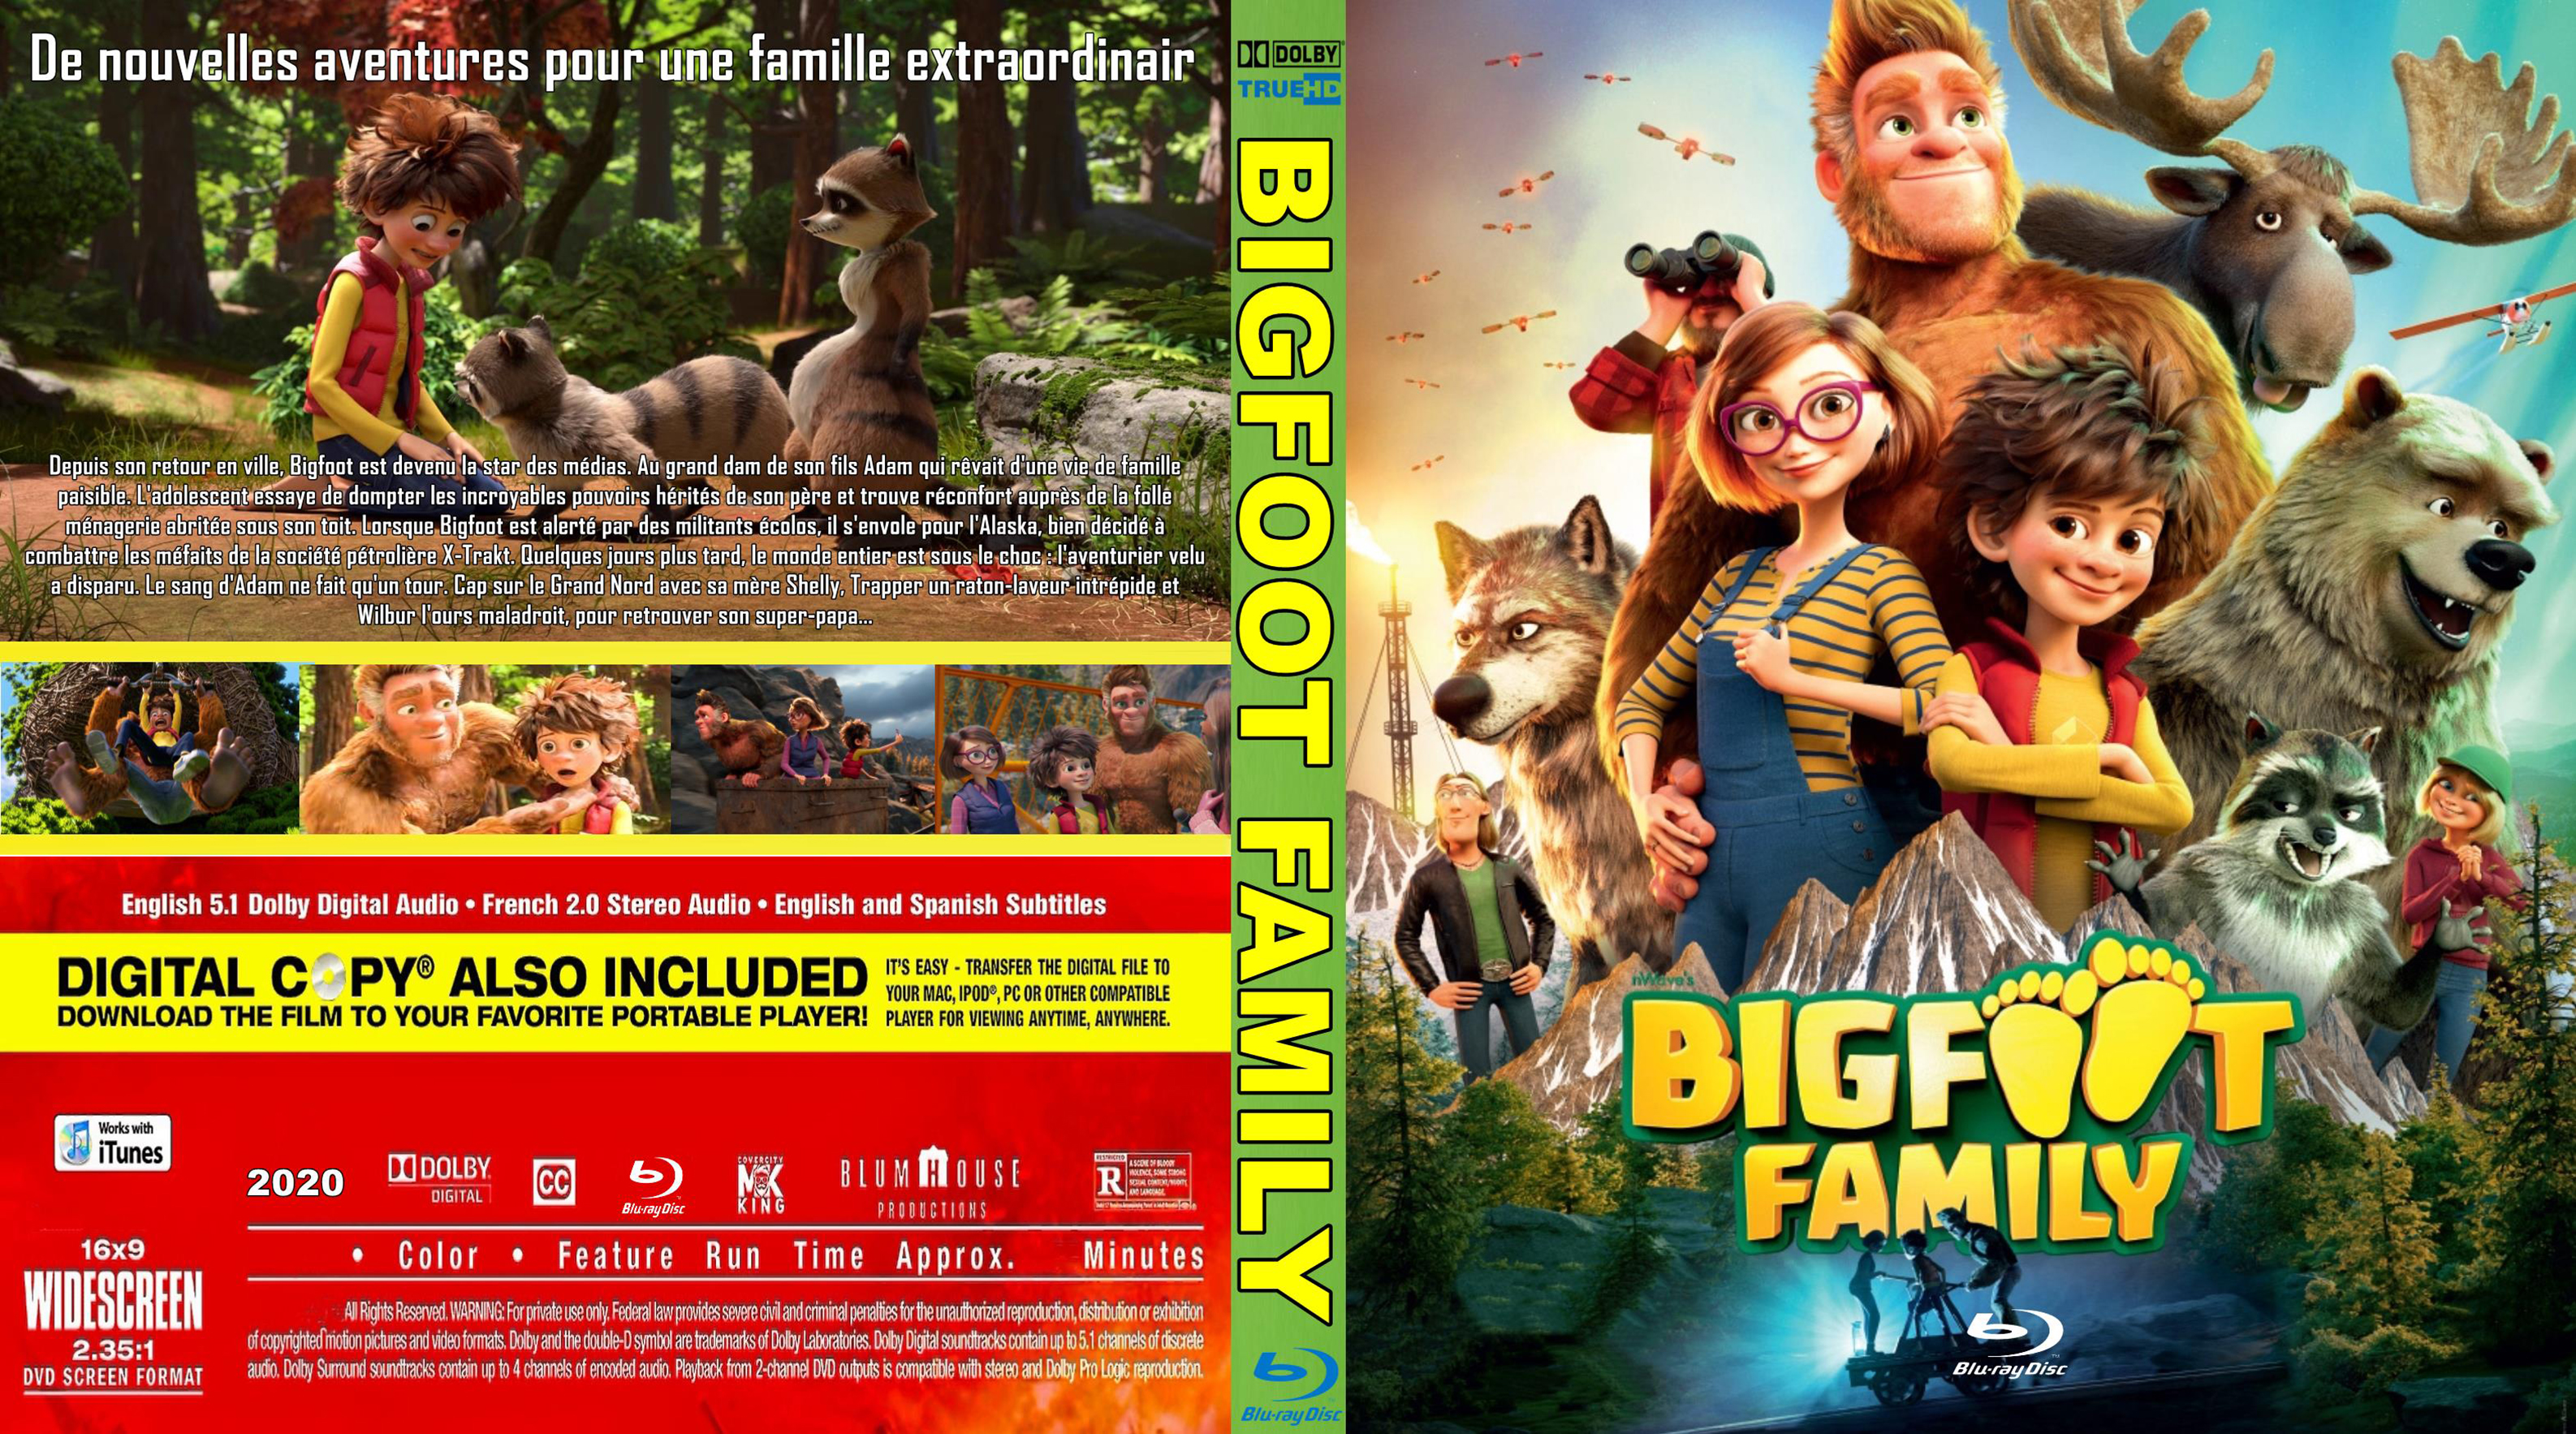 Jaquette DVD Bigfoot family custom (BLU-RAY)